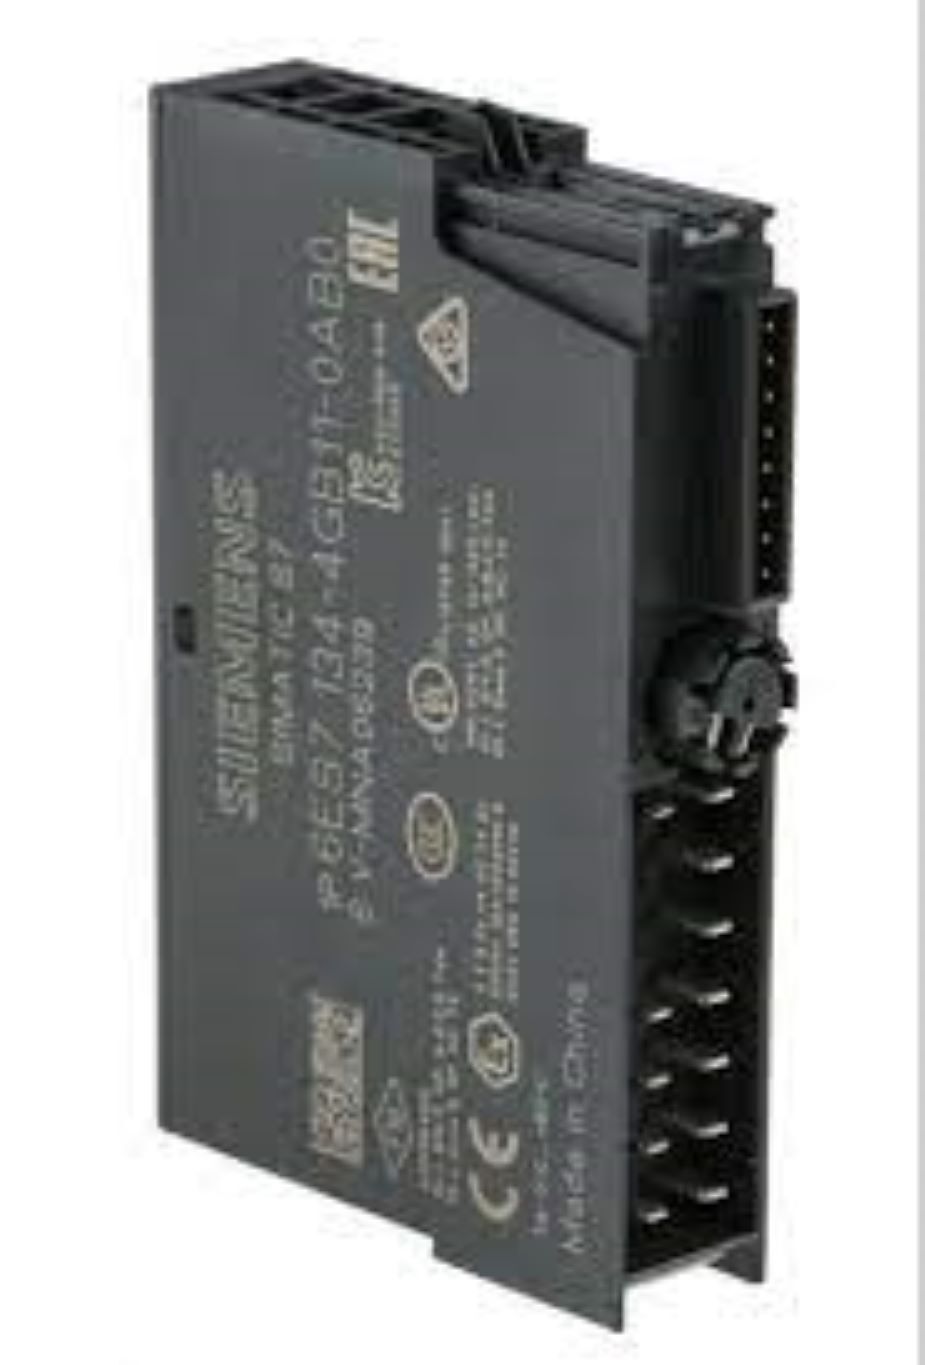 6ES7134-4GB11-0AX0-siemens programmable logic controller